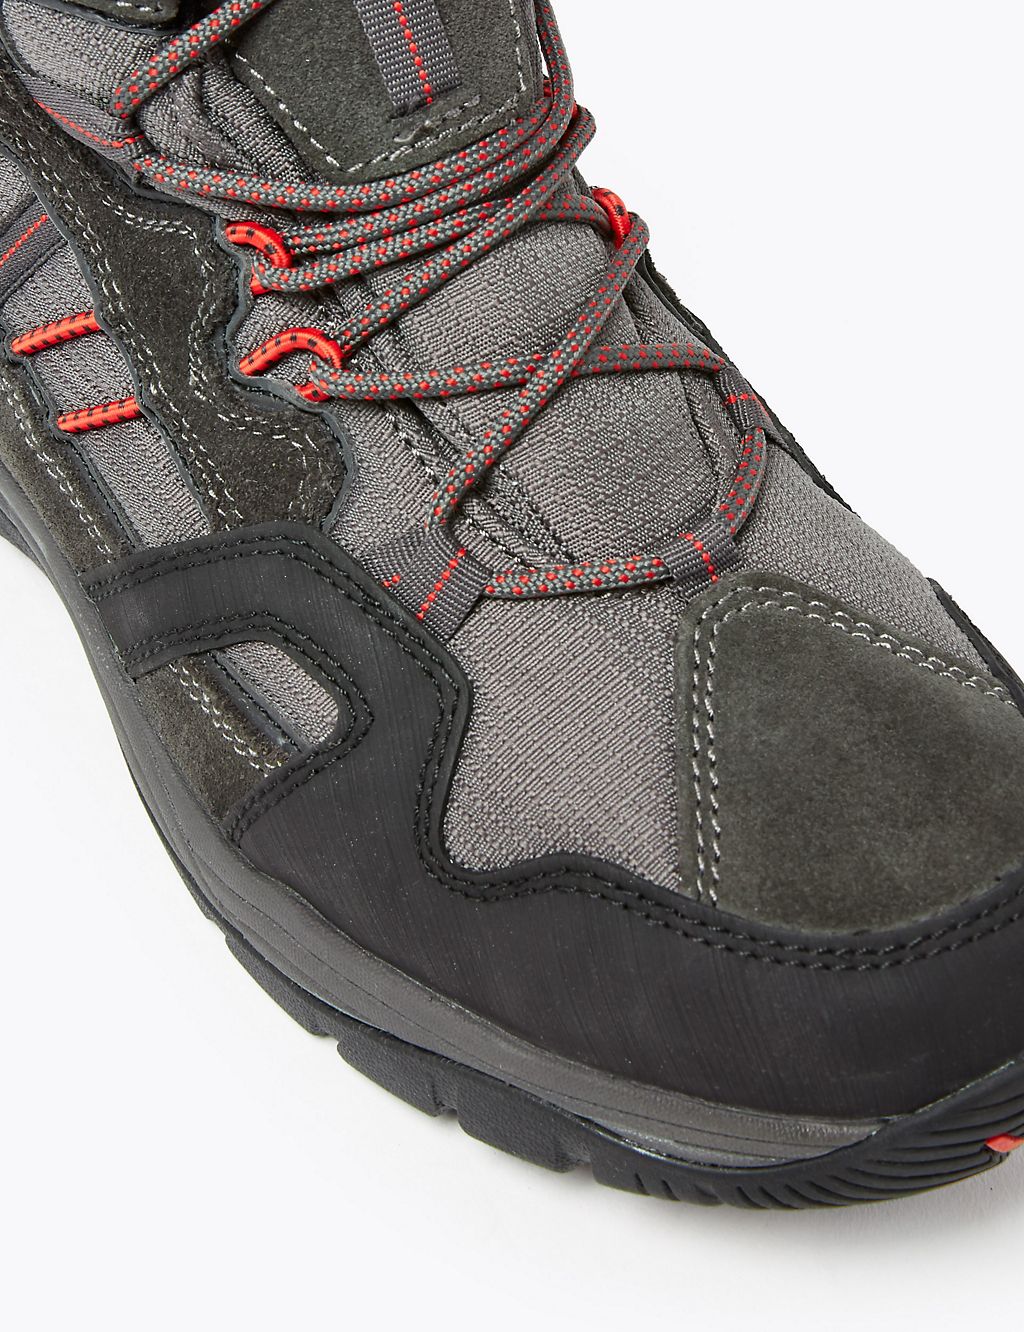 Waterproof Walking Boots 4 of 5